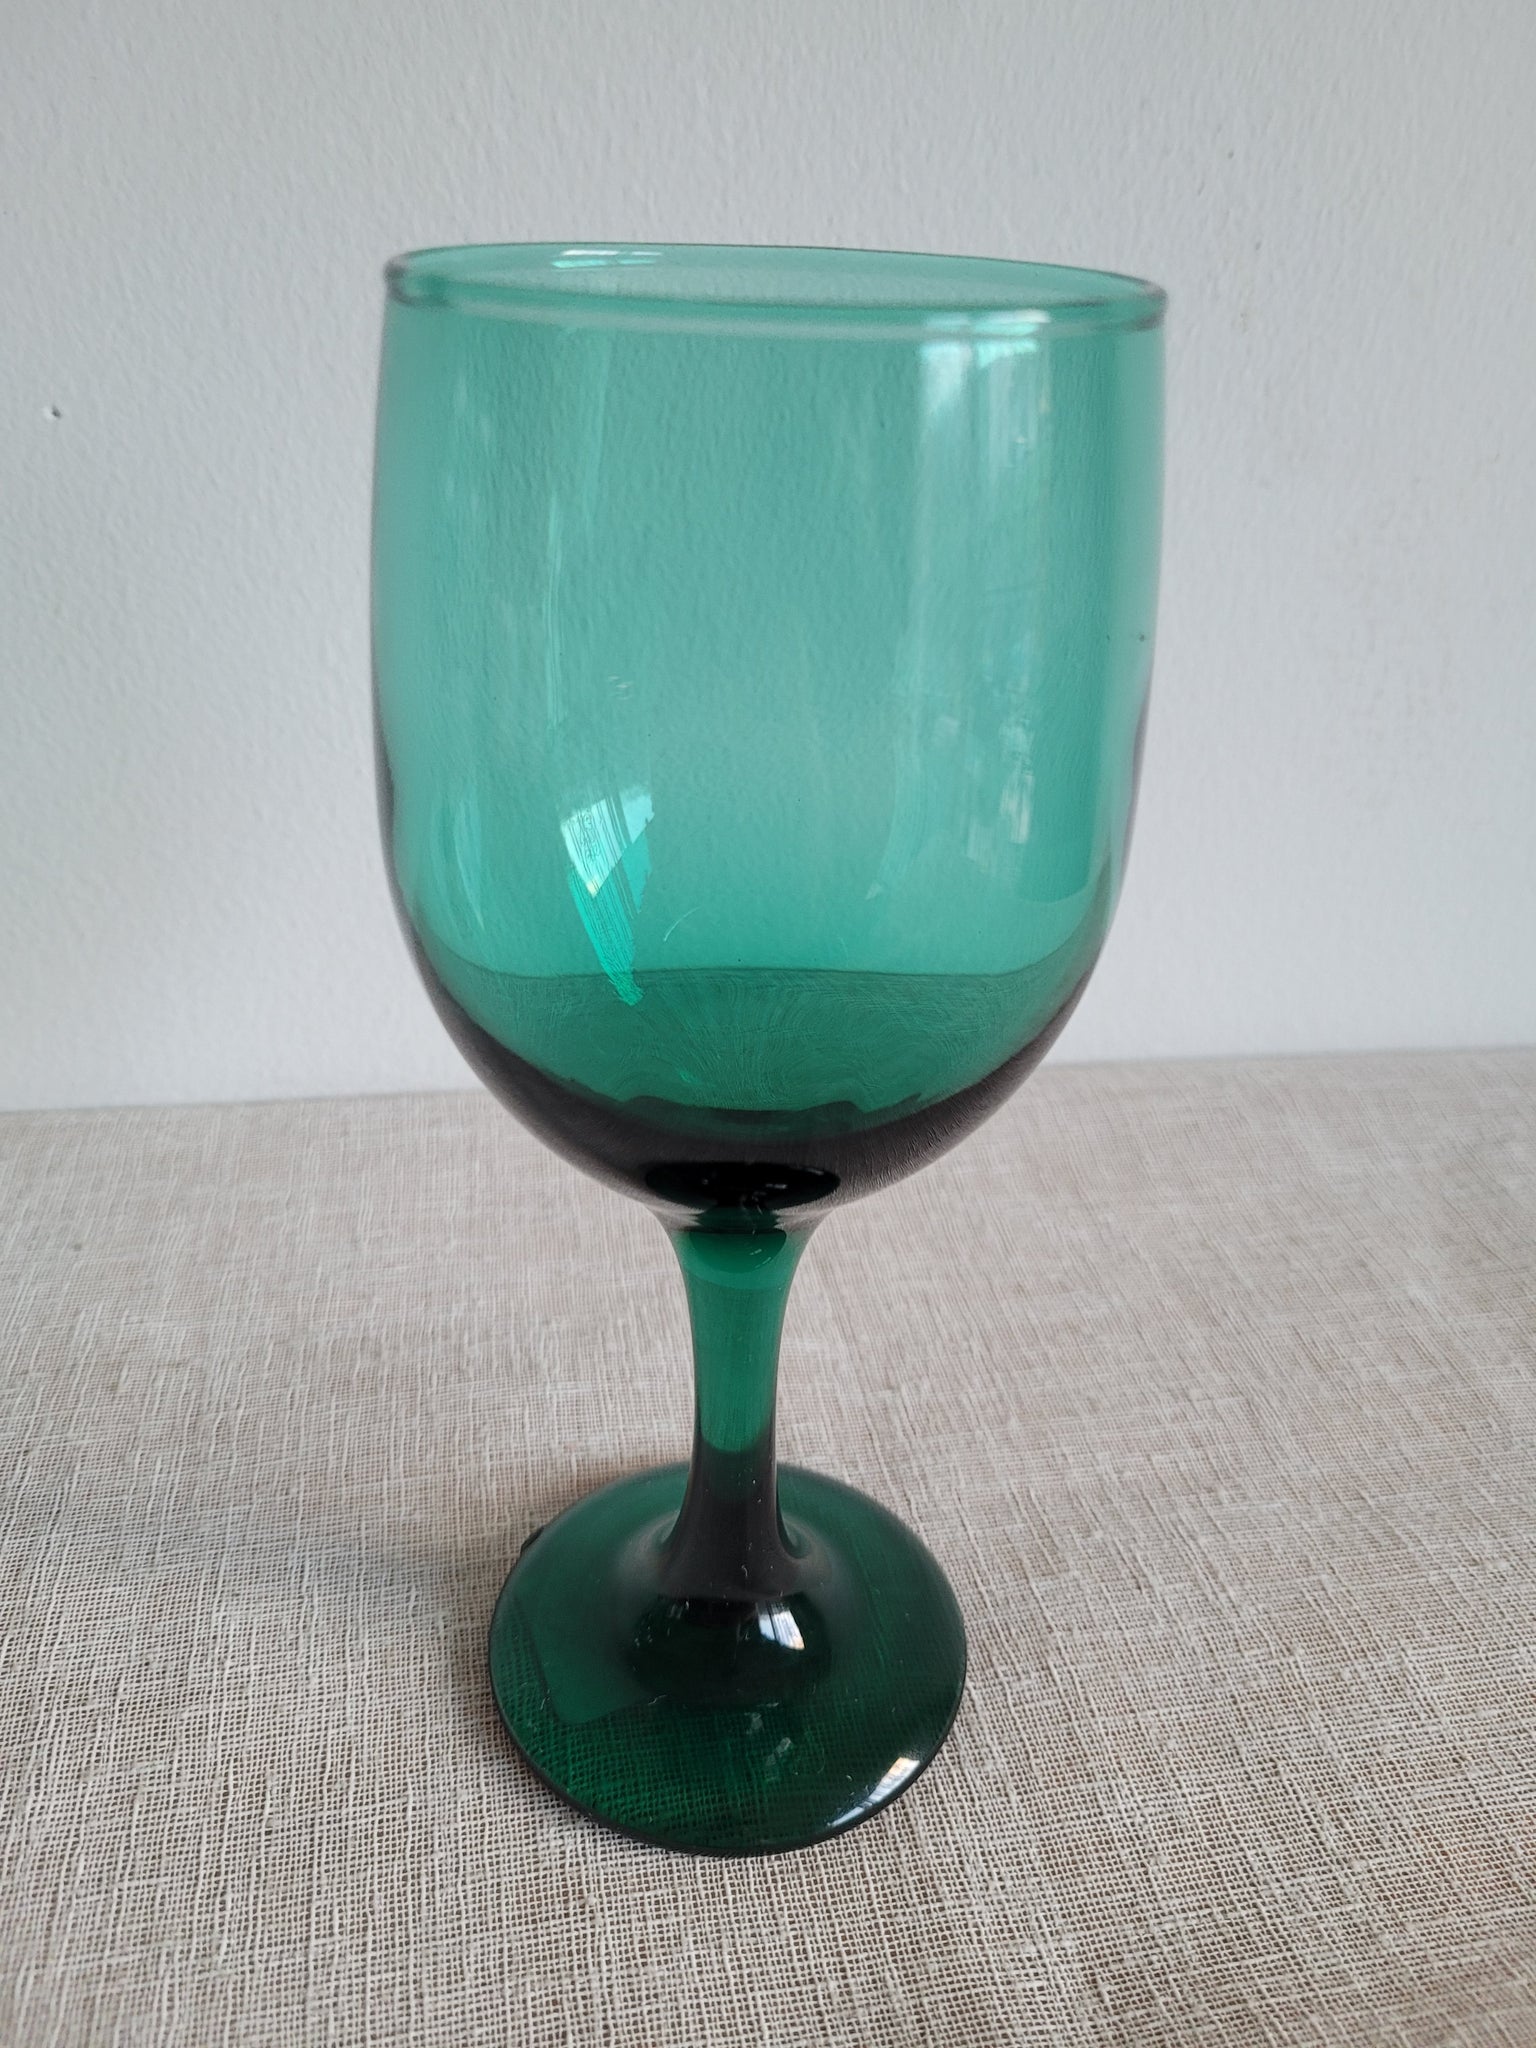 Green Goblet Wine Glass Set